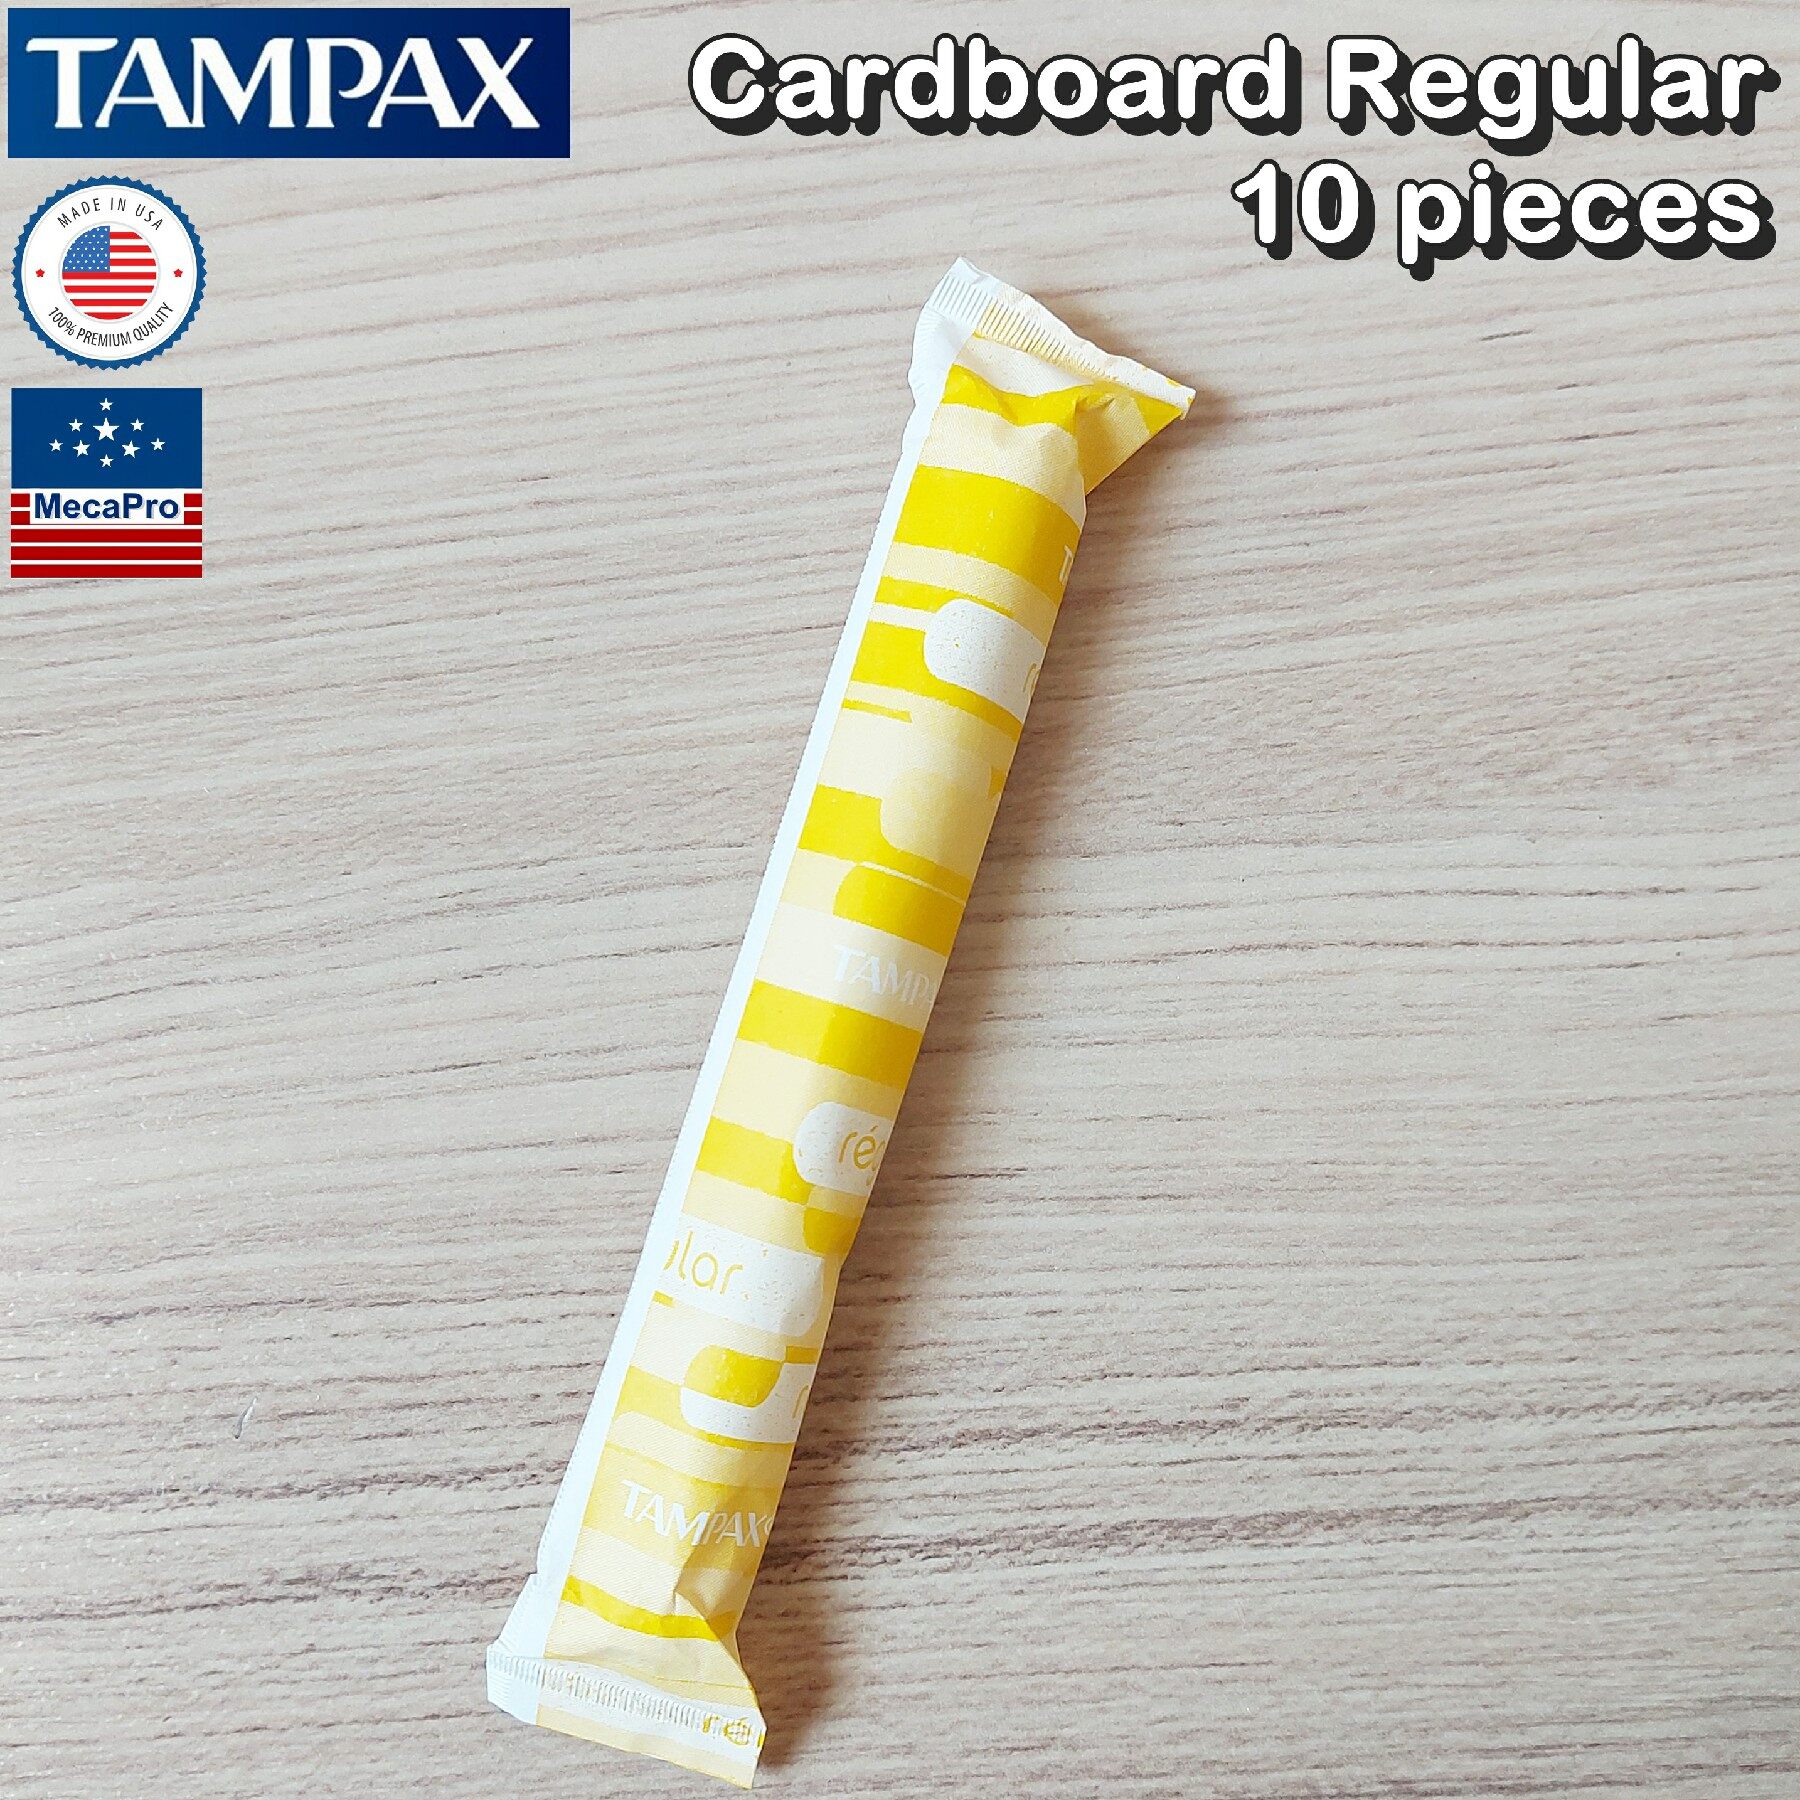 Tampax® Cardboard Regular Tampons 10 pieces ผ้าอนามัยแบบสอด 10 ชิ้น เหมาะกับวันมาปกติ